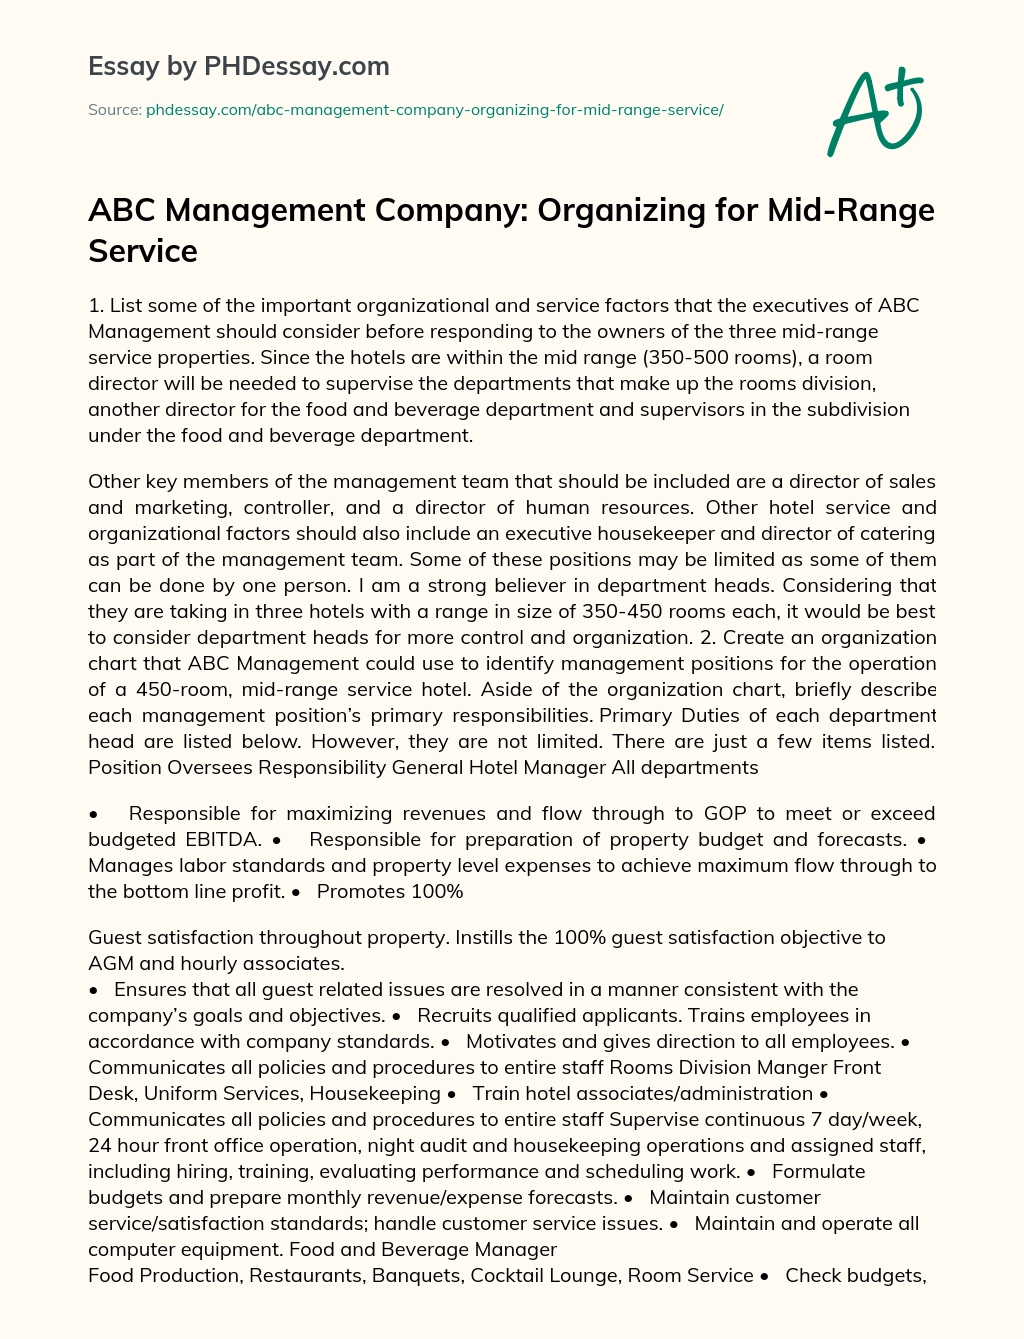 ABC Management Company: Organizing for Mid-Range Service essay